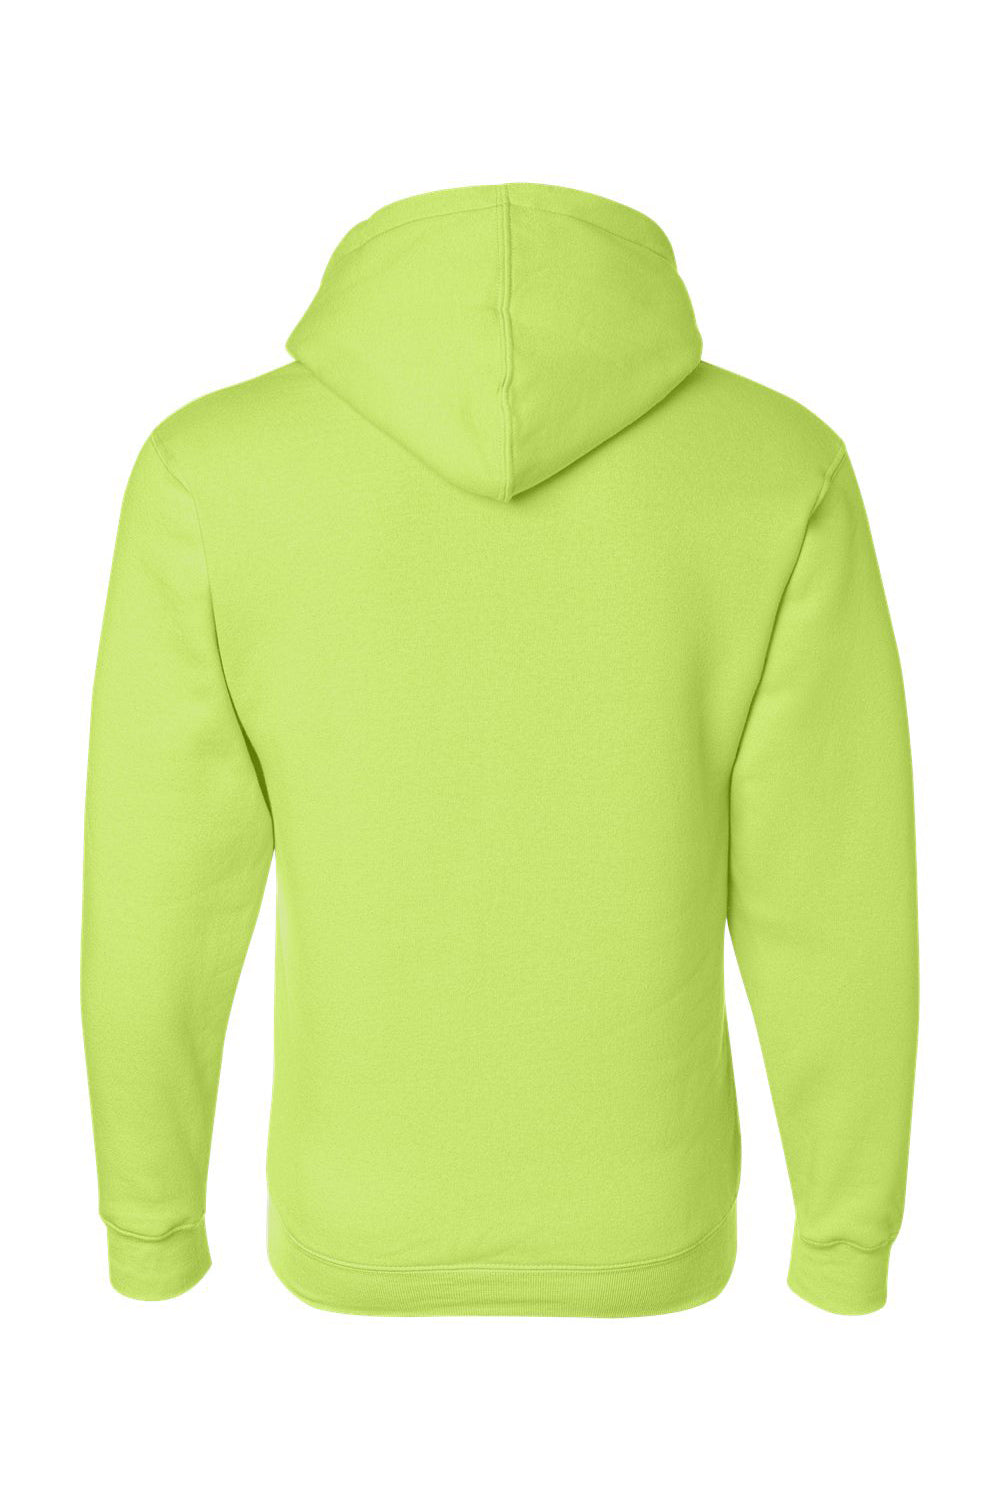 Bayside BA900 Mens USA Made Full Zip Hooded Sweatshirt Hoodie Lime Green Flat Back